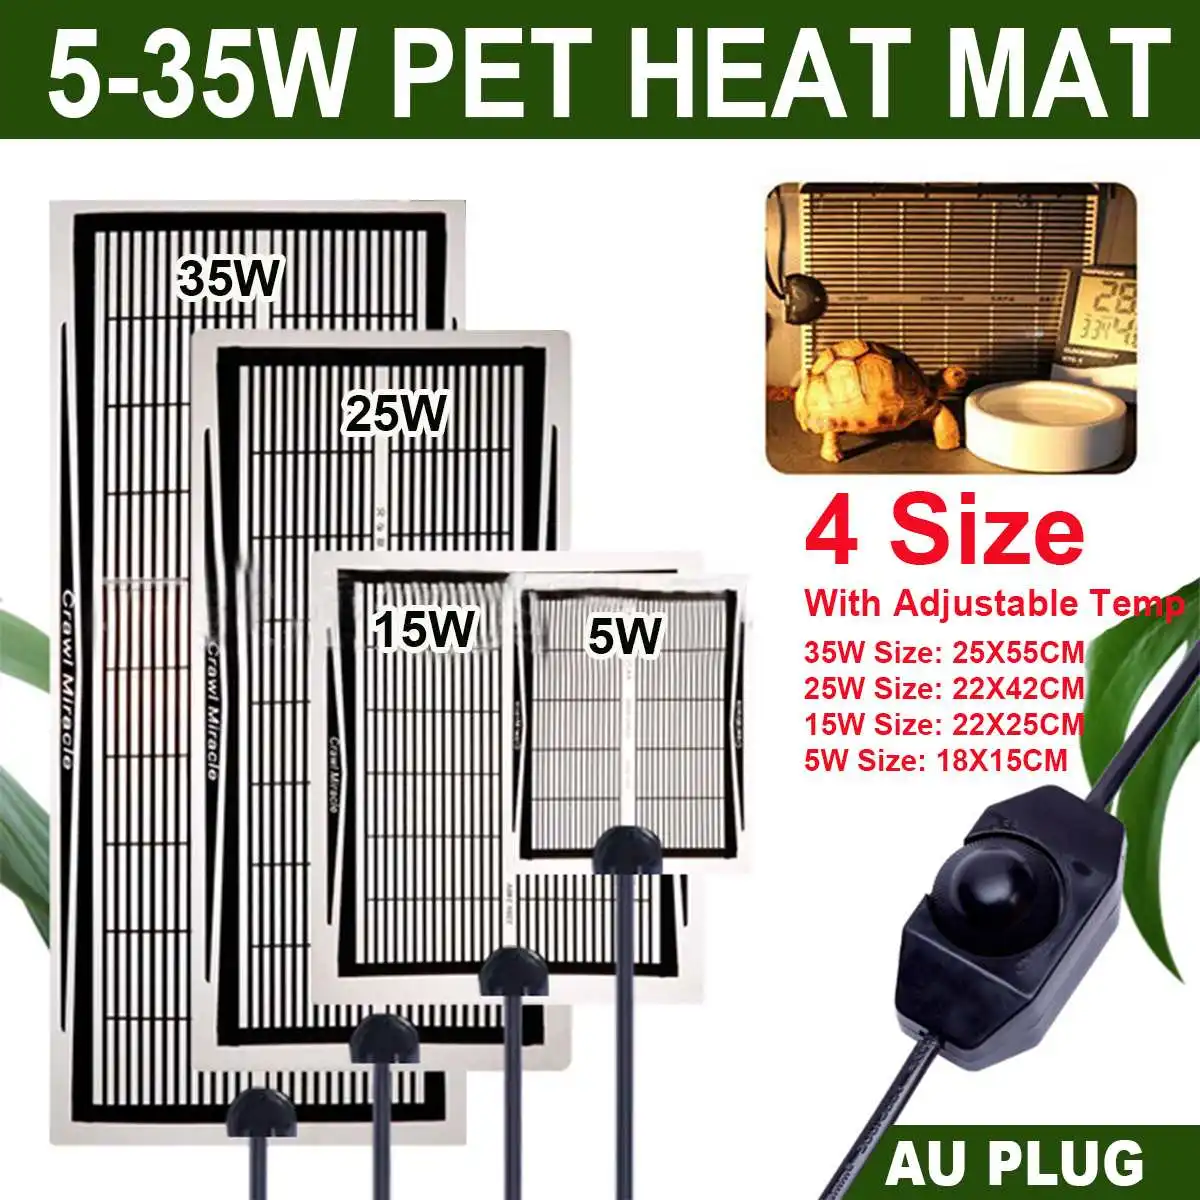 Estera de calefacción ajustable para reptiles, almohadilla de calor caliente para mascotas, 5W/15W/25W/35W 220V, almohadilla de calor para serpientes, Tortuga, lagarto, Araña, AU